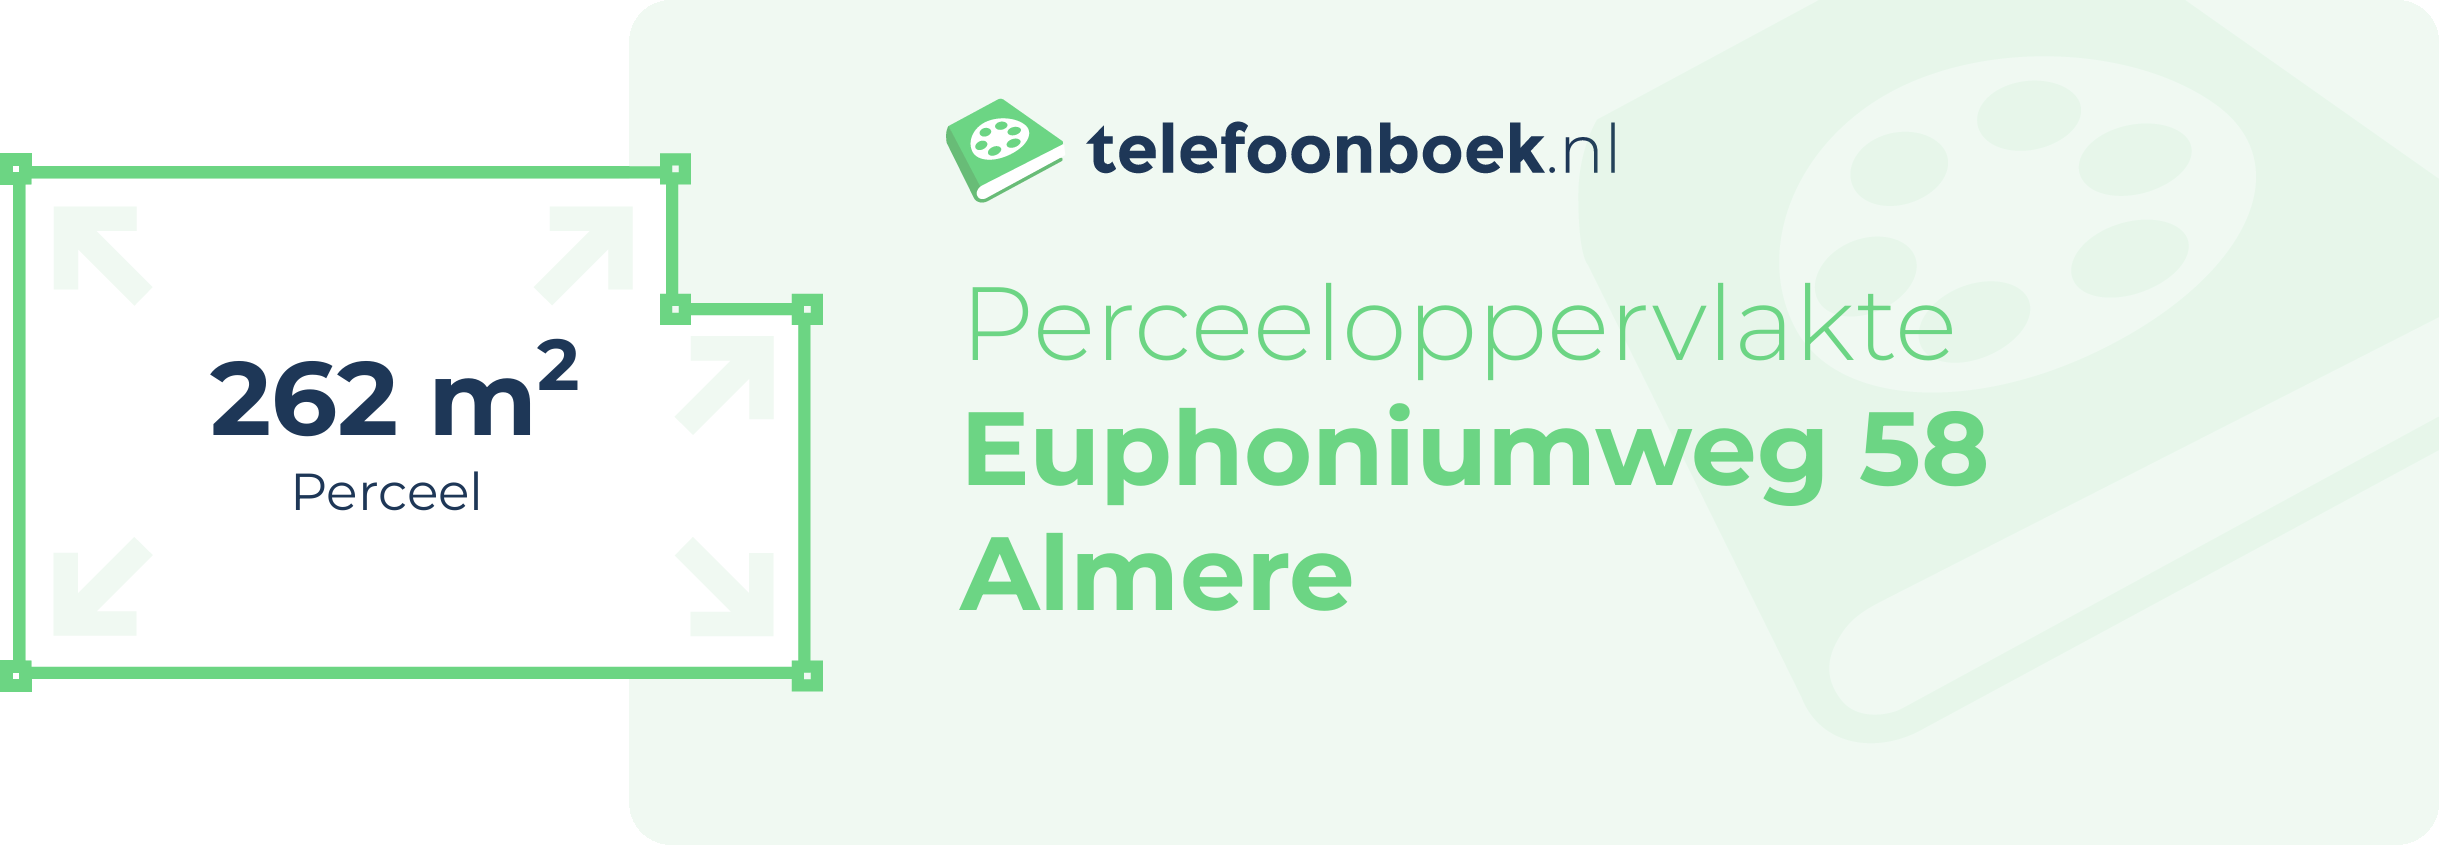 Perceeloppervlakte Euphoniumweg 58 Almere